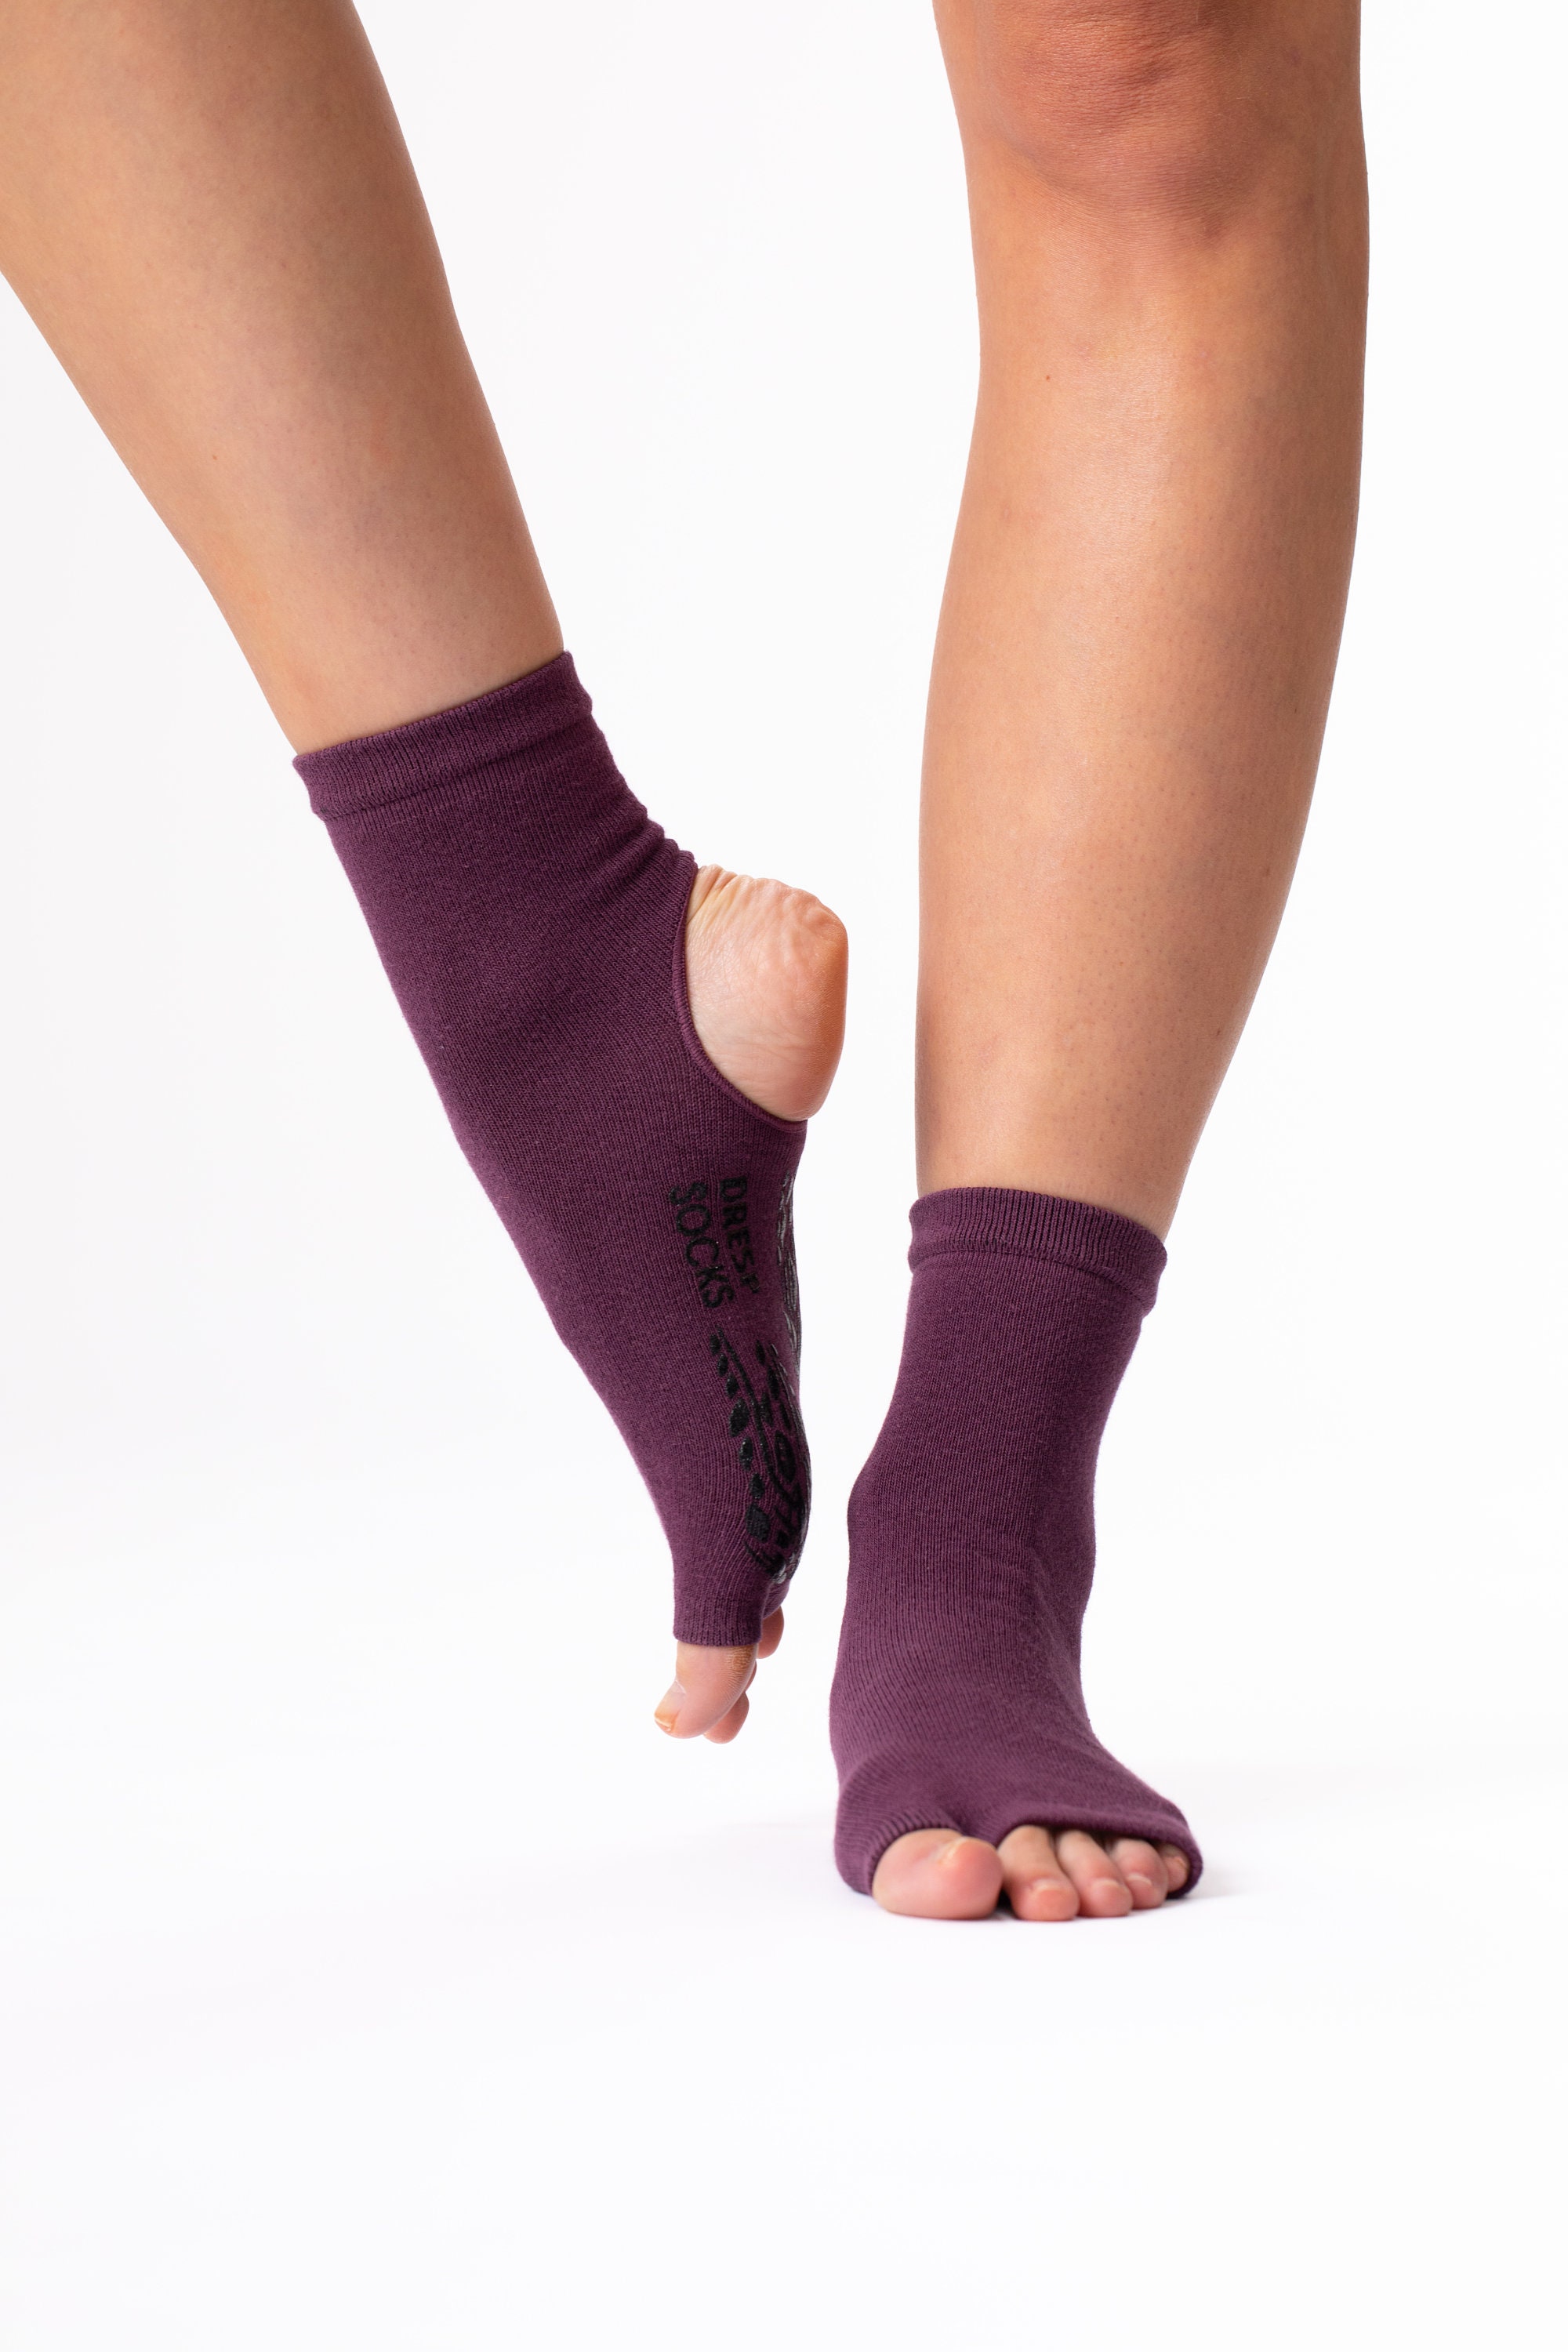 DRESP Toe and Heel-free Elegant Yoga Socks With Anti-slip Sole Cotton Mix  Cuff 